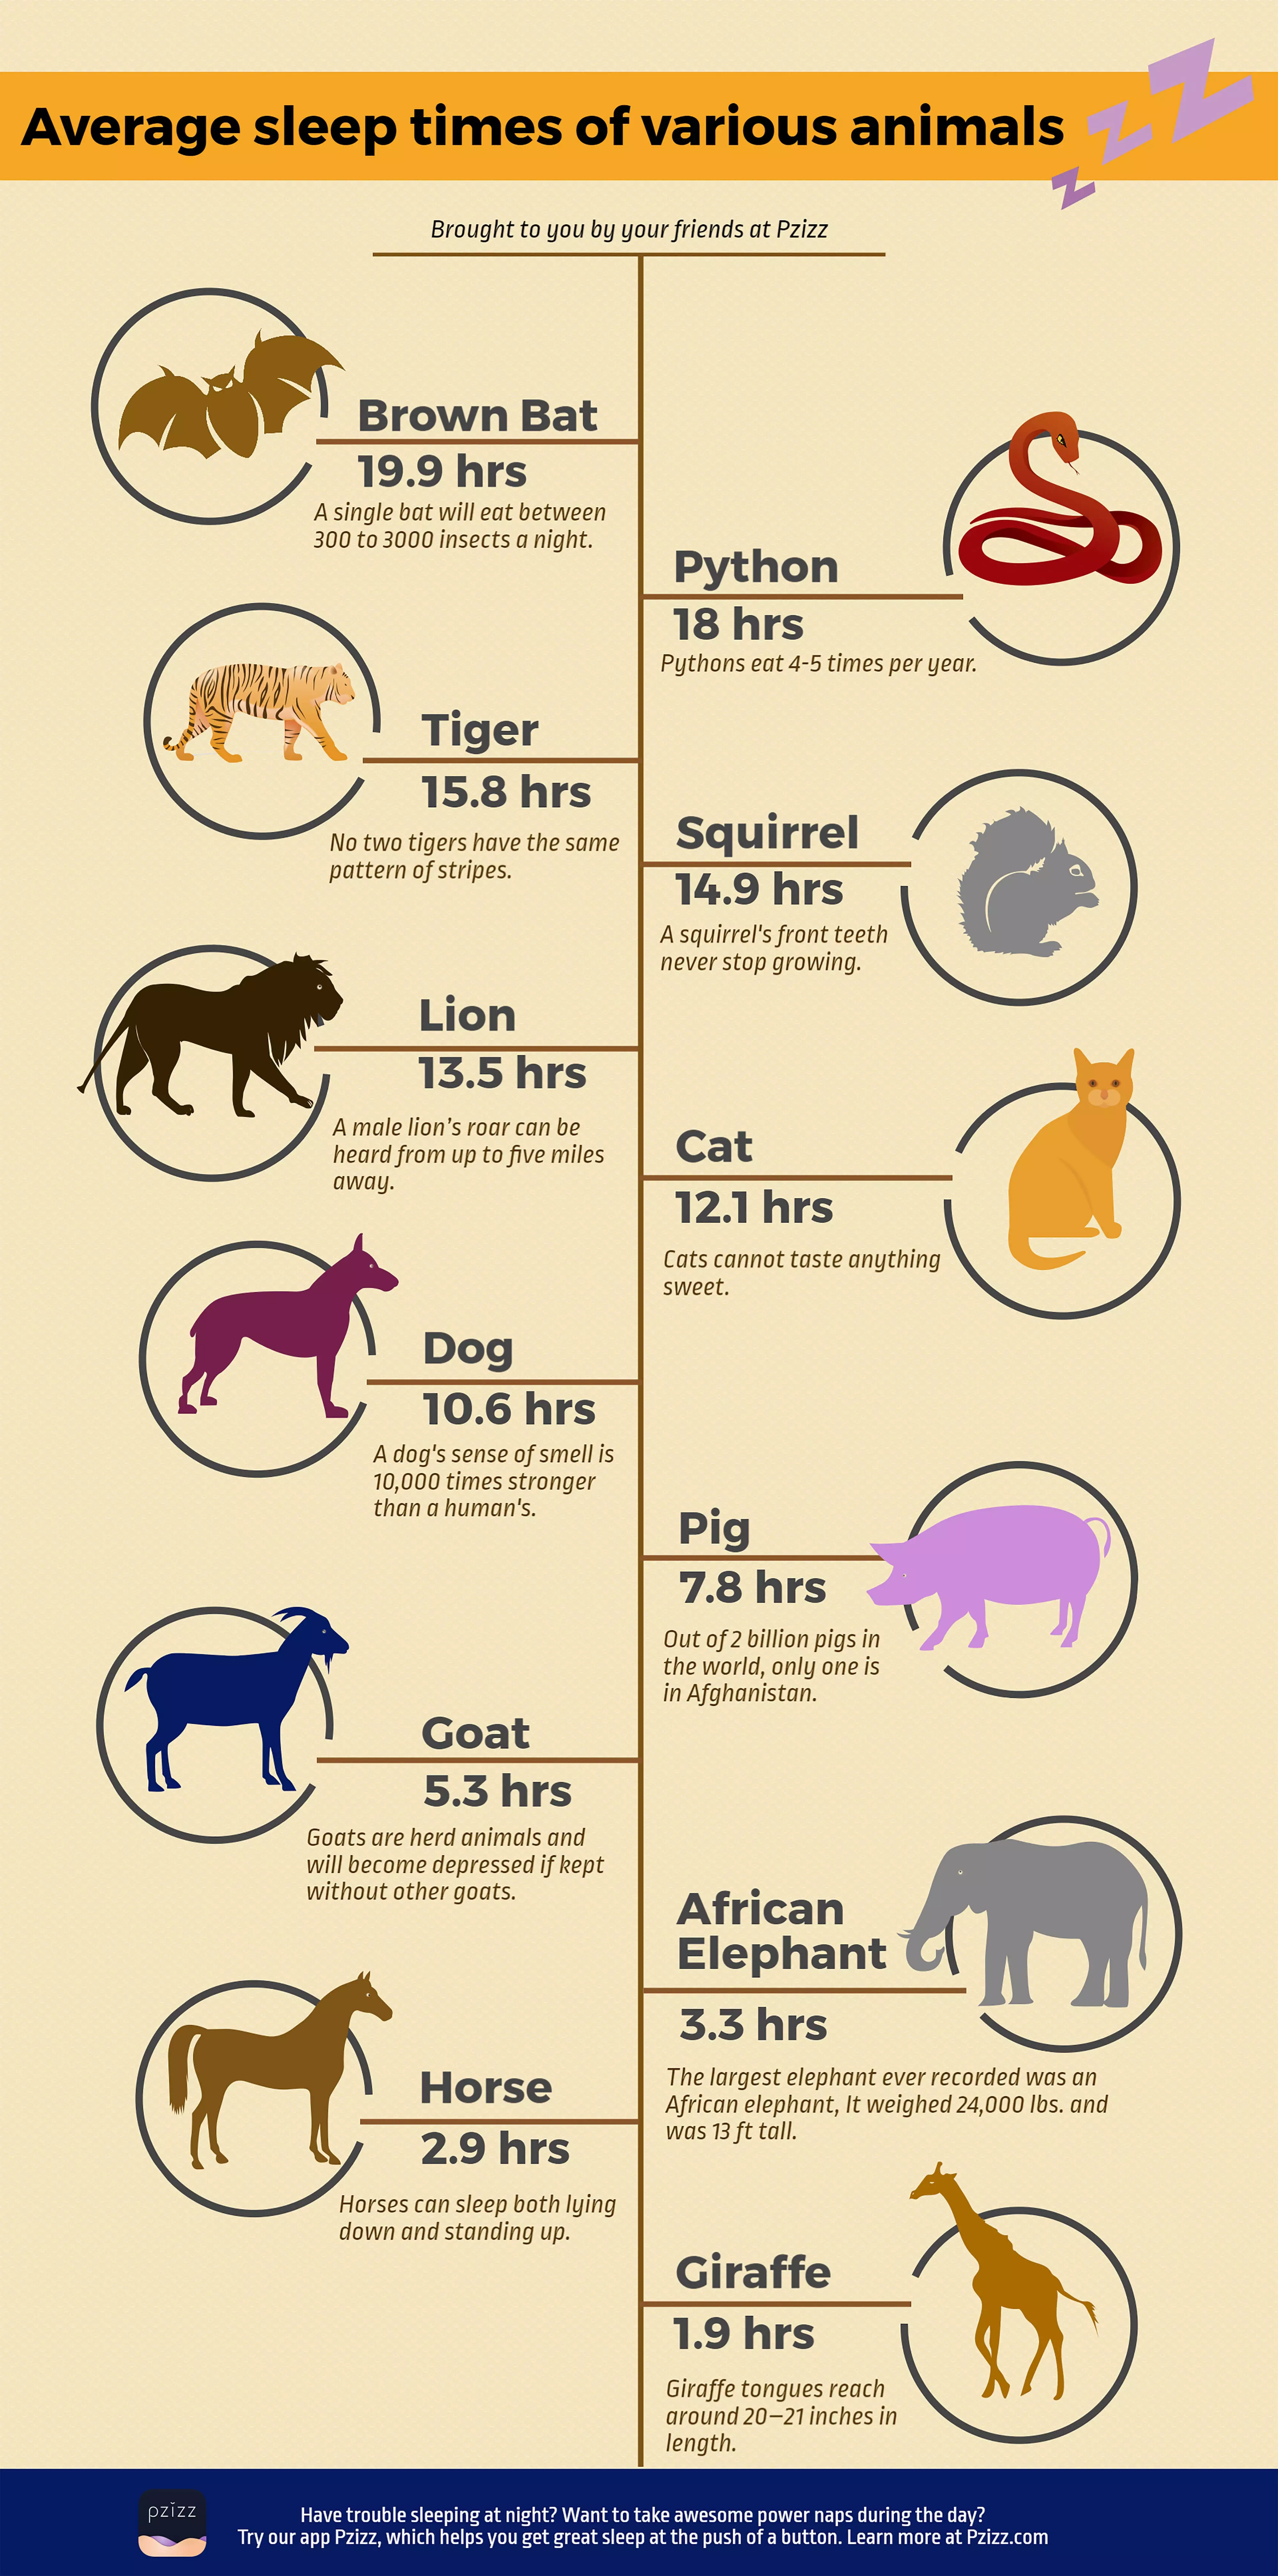 How much do animals sleep?